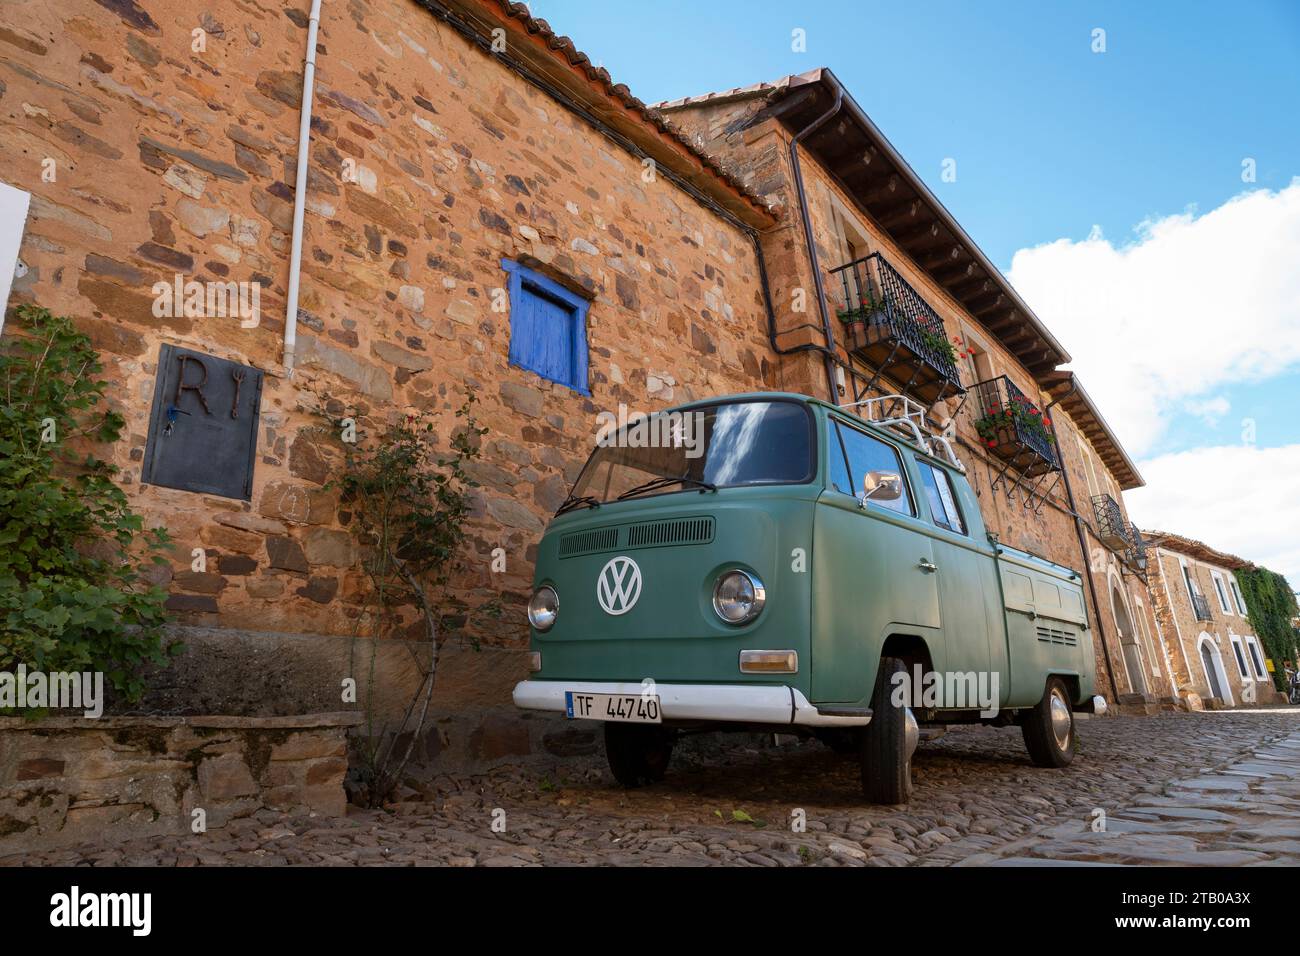 A vintage Volkswagen pickup van is parked along Celle Real in the Maragato village of Castrillo de los Polvazares along the Camino Frances in Leon, Sp Stock Photo